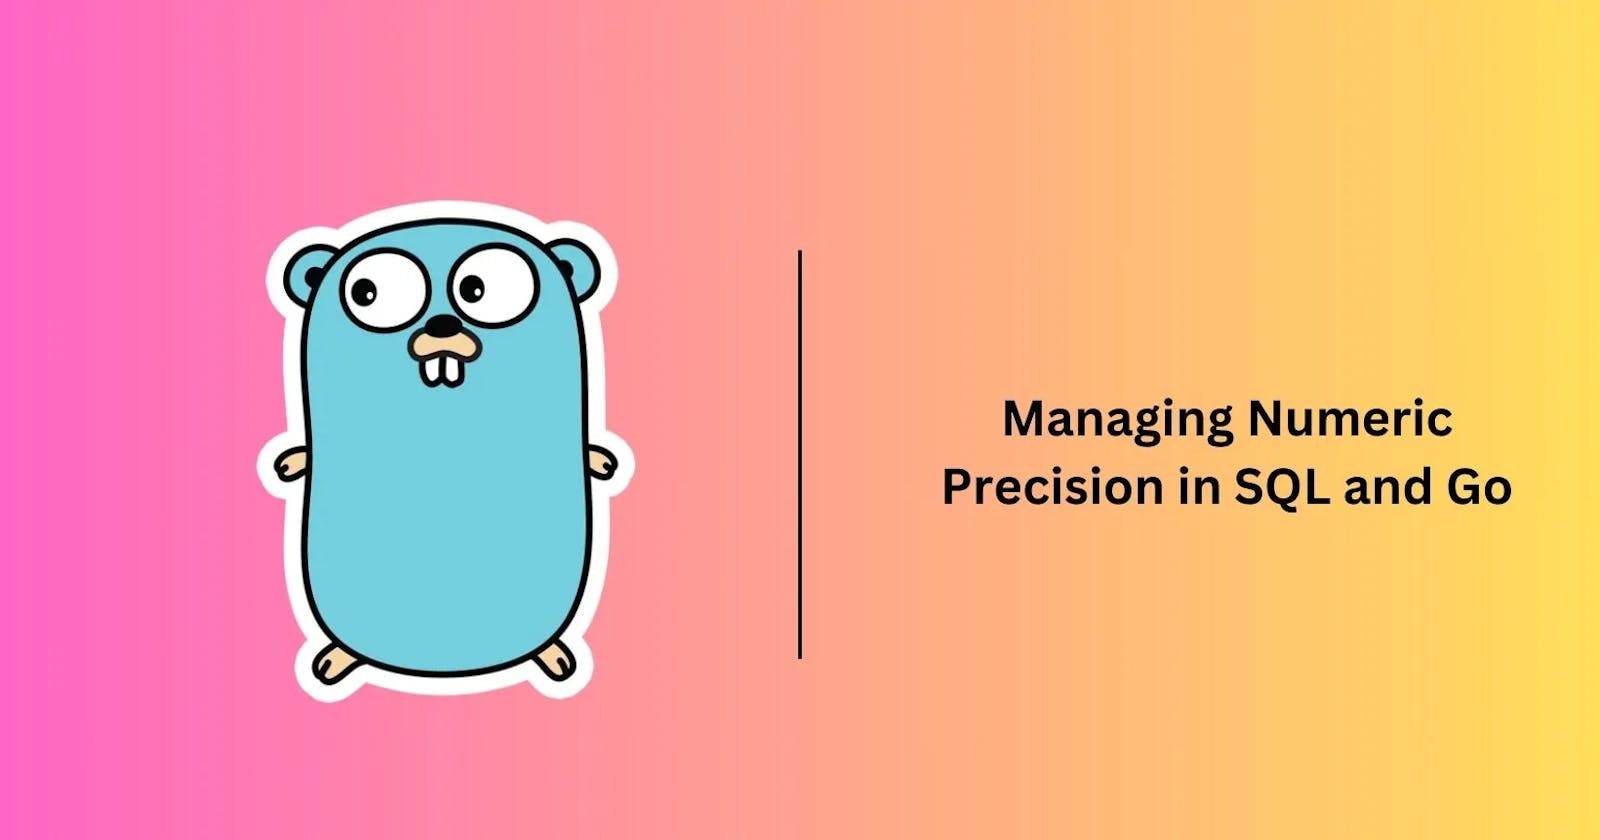 Managing Numeric Precision in SQL and Go